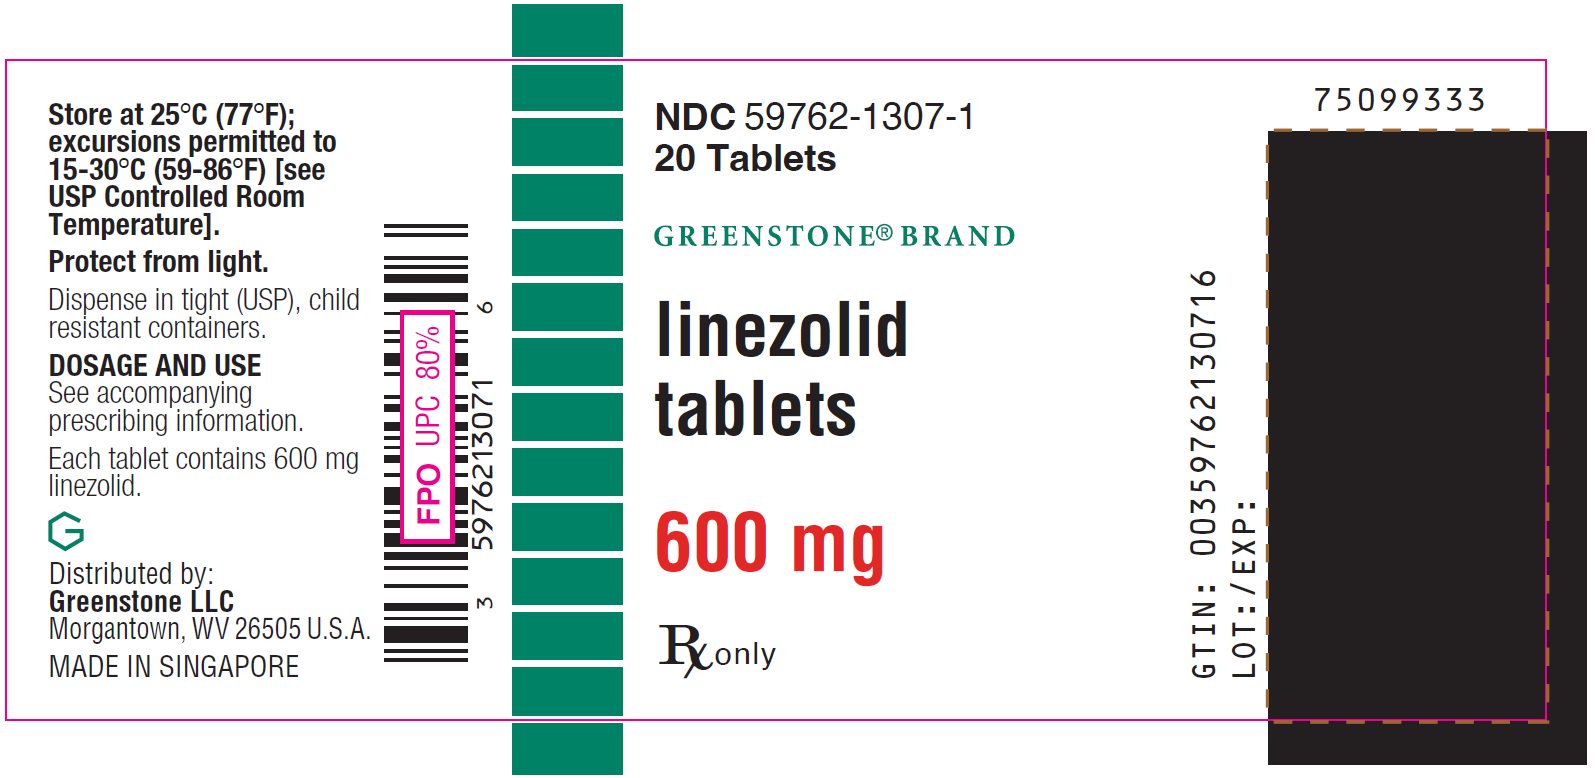 PRINCIPAL DISPLAY PANEL - 600 mg Tablet Bottle Label